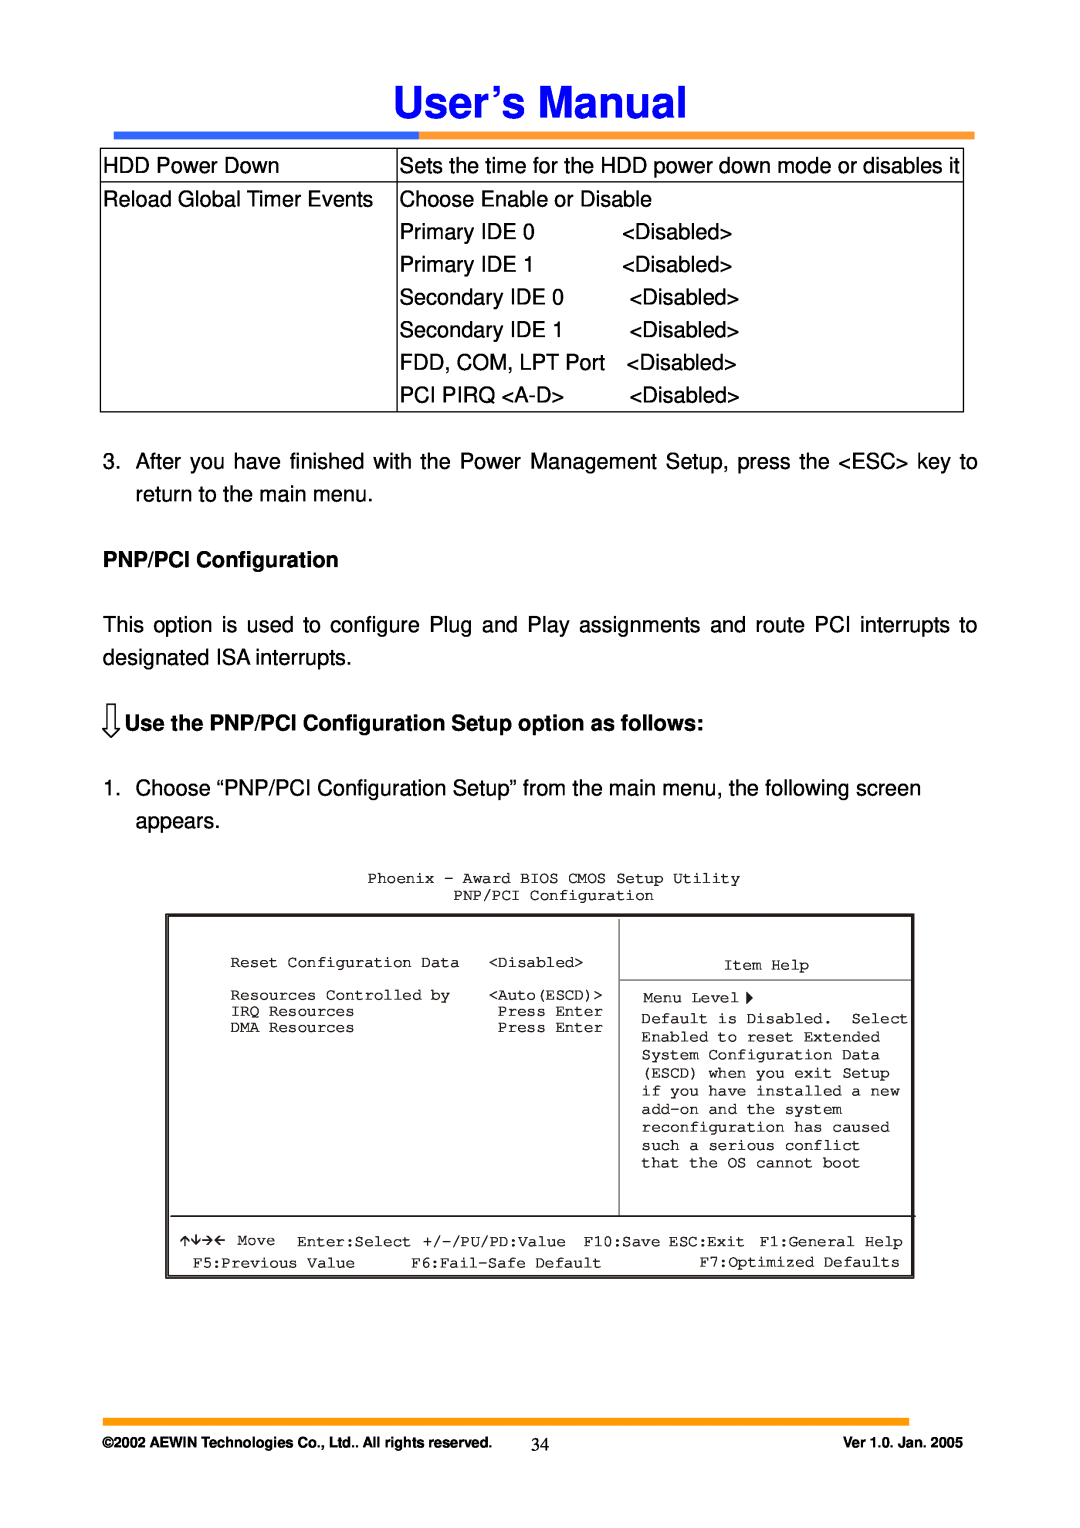 Intel AW-A795 user manual Use the PNP/PCI Configuration Setup option as follows, User’s Manual 